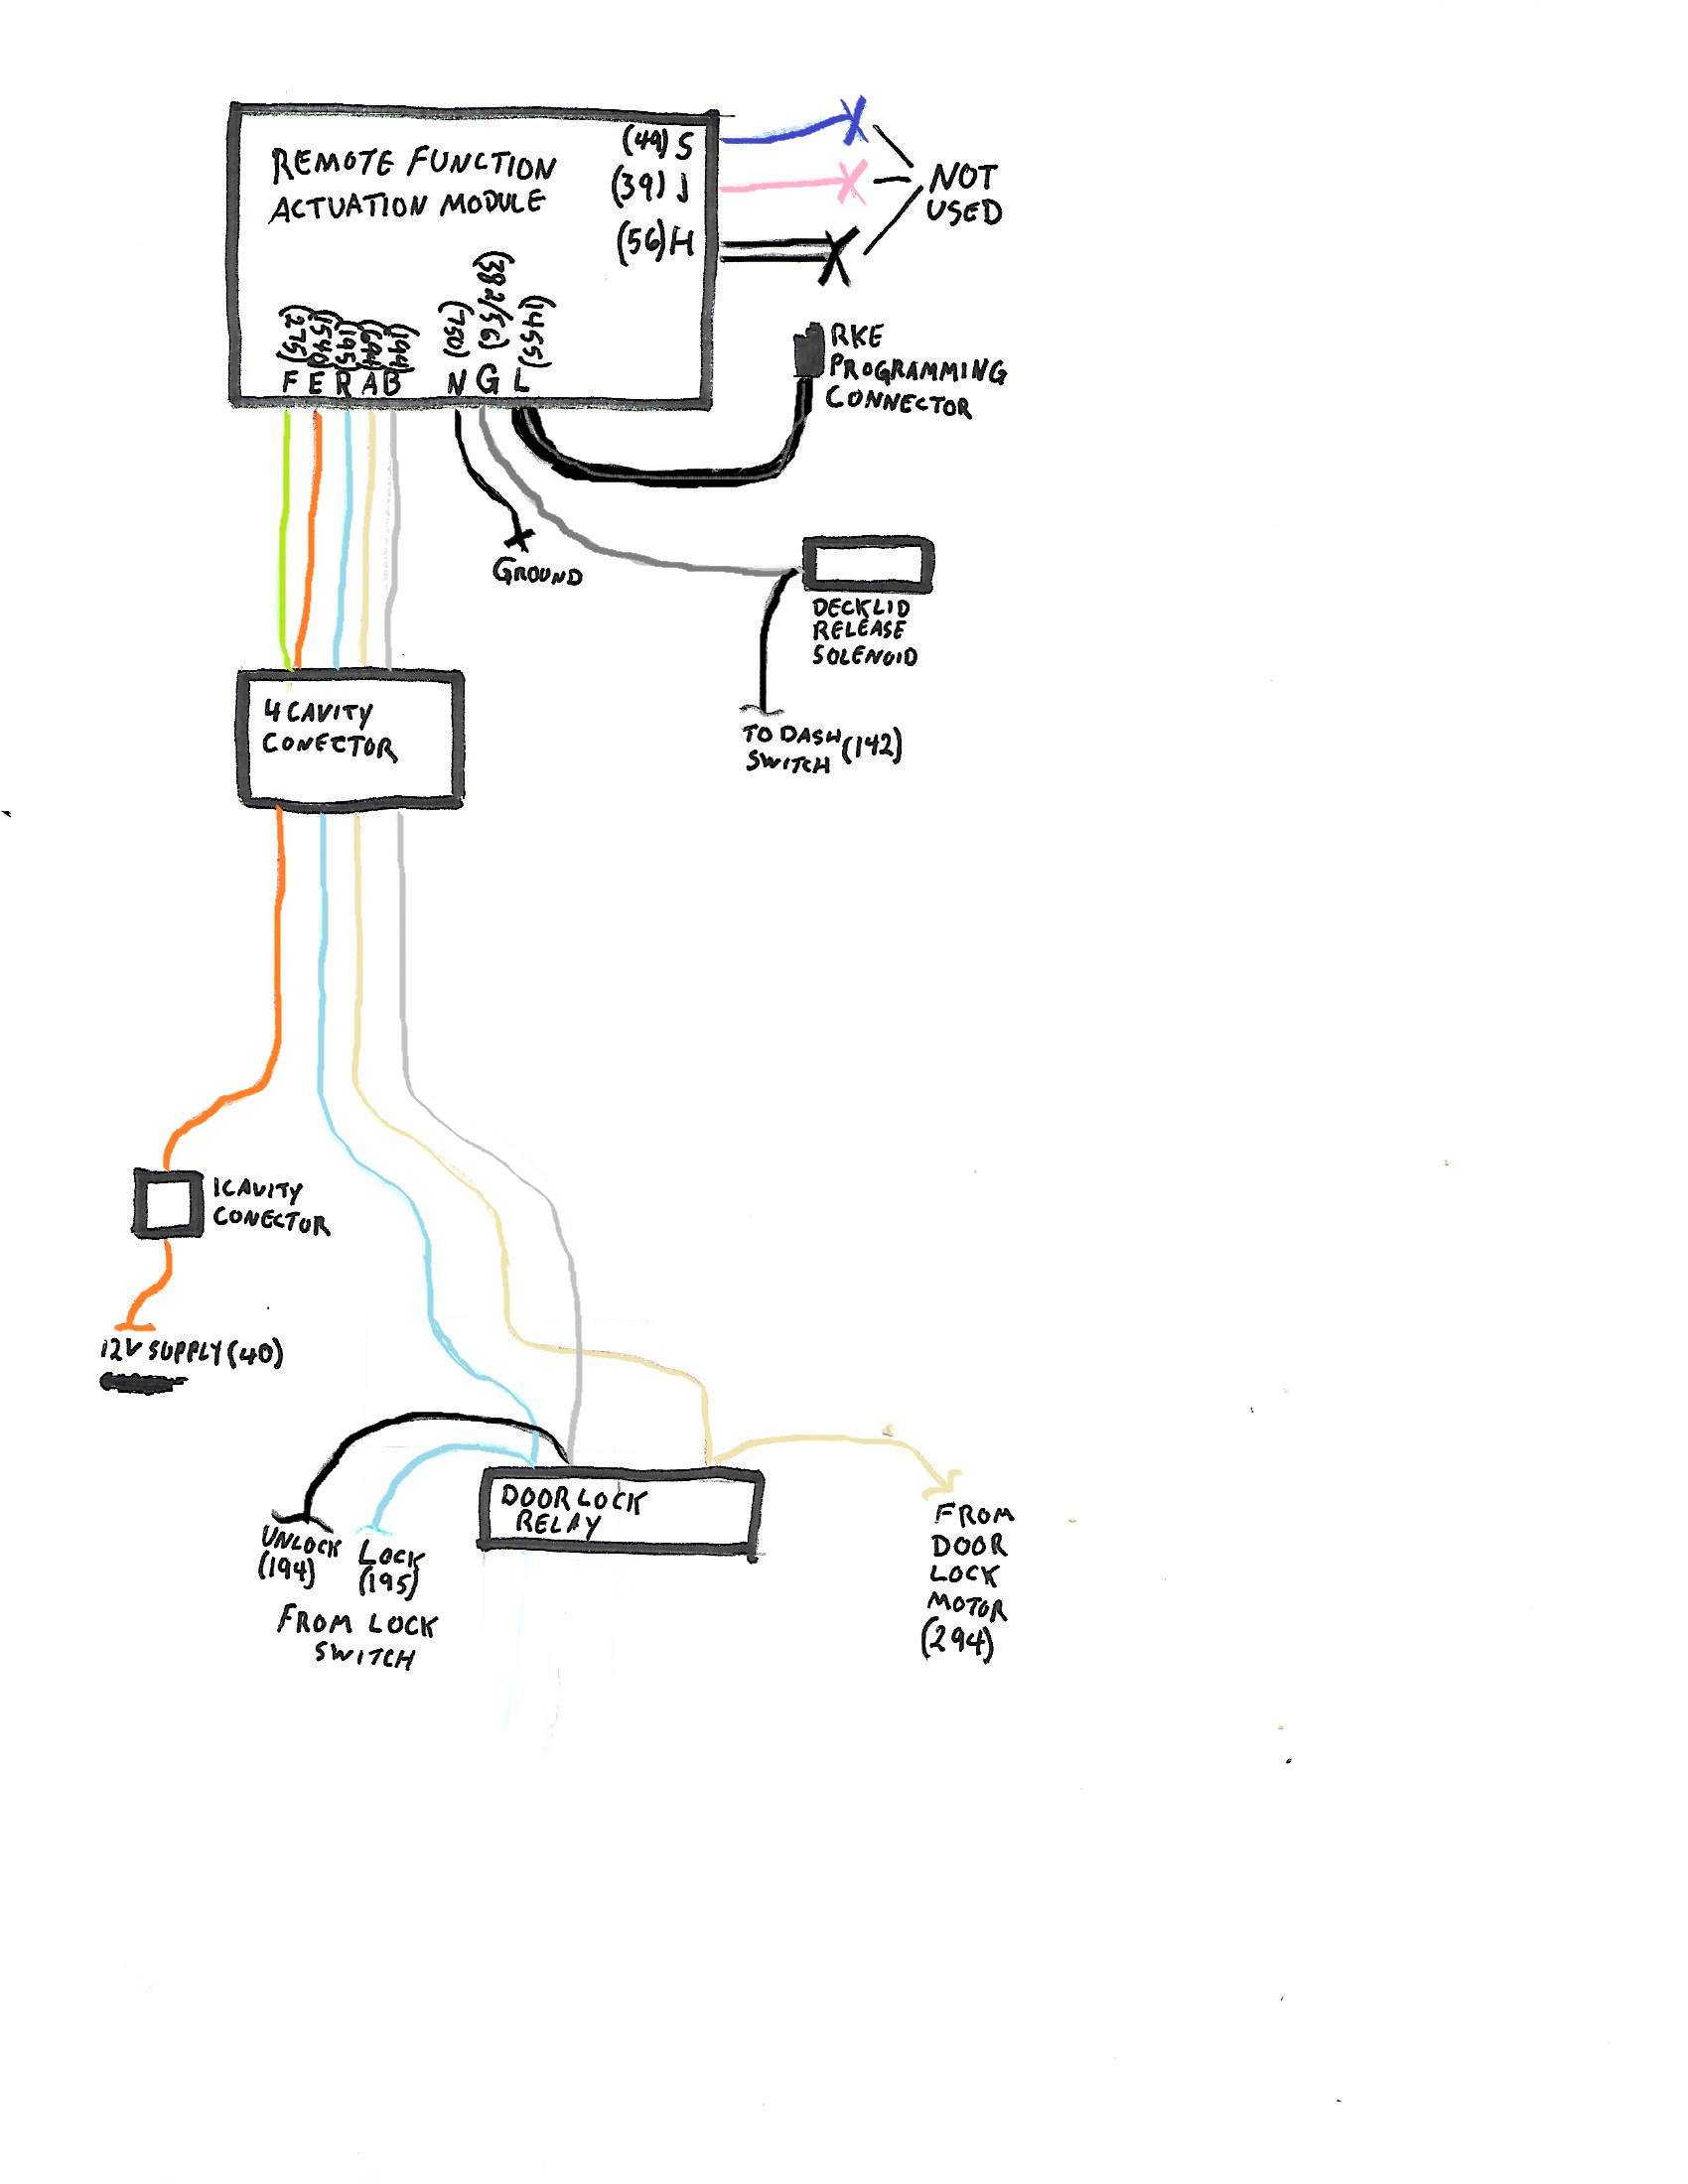 RKE conversion wire diagram.jpg